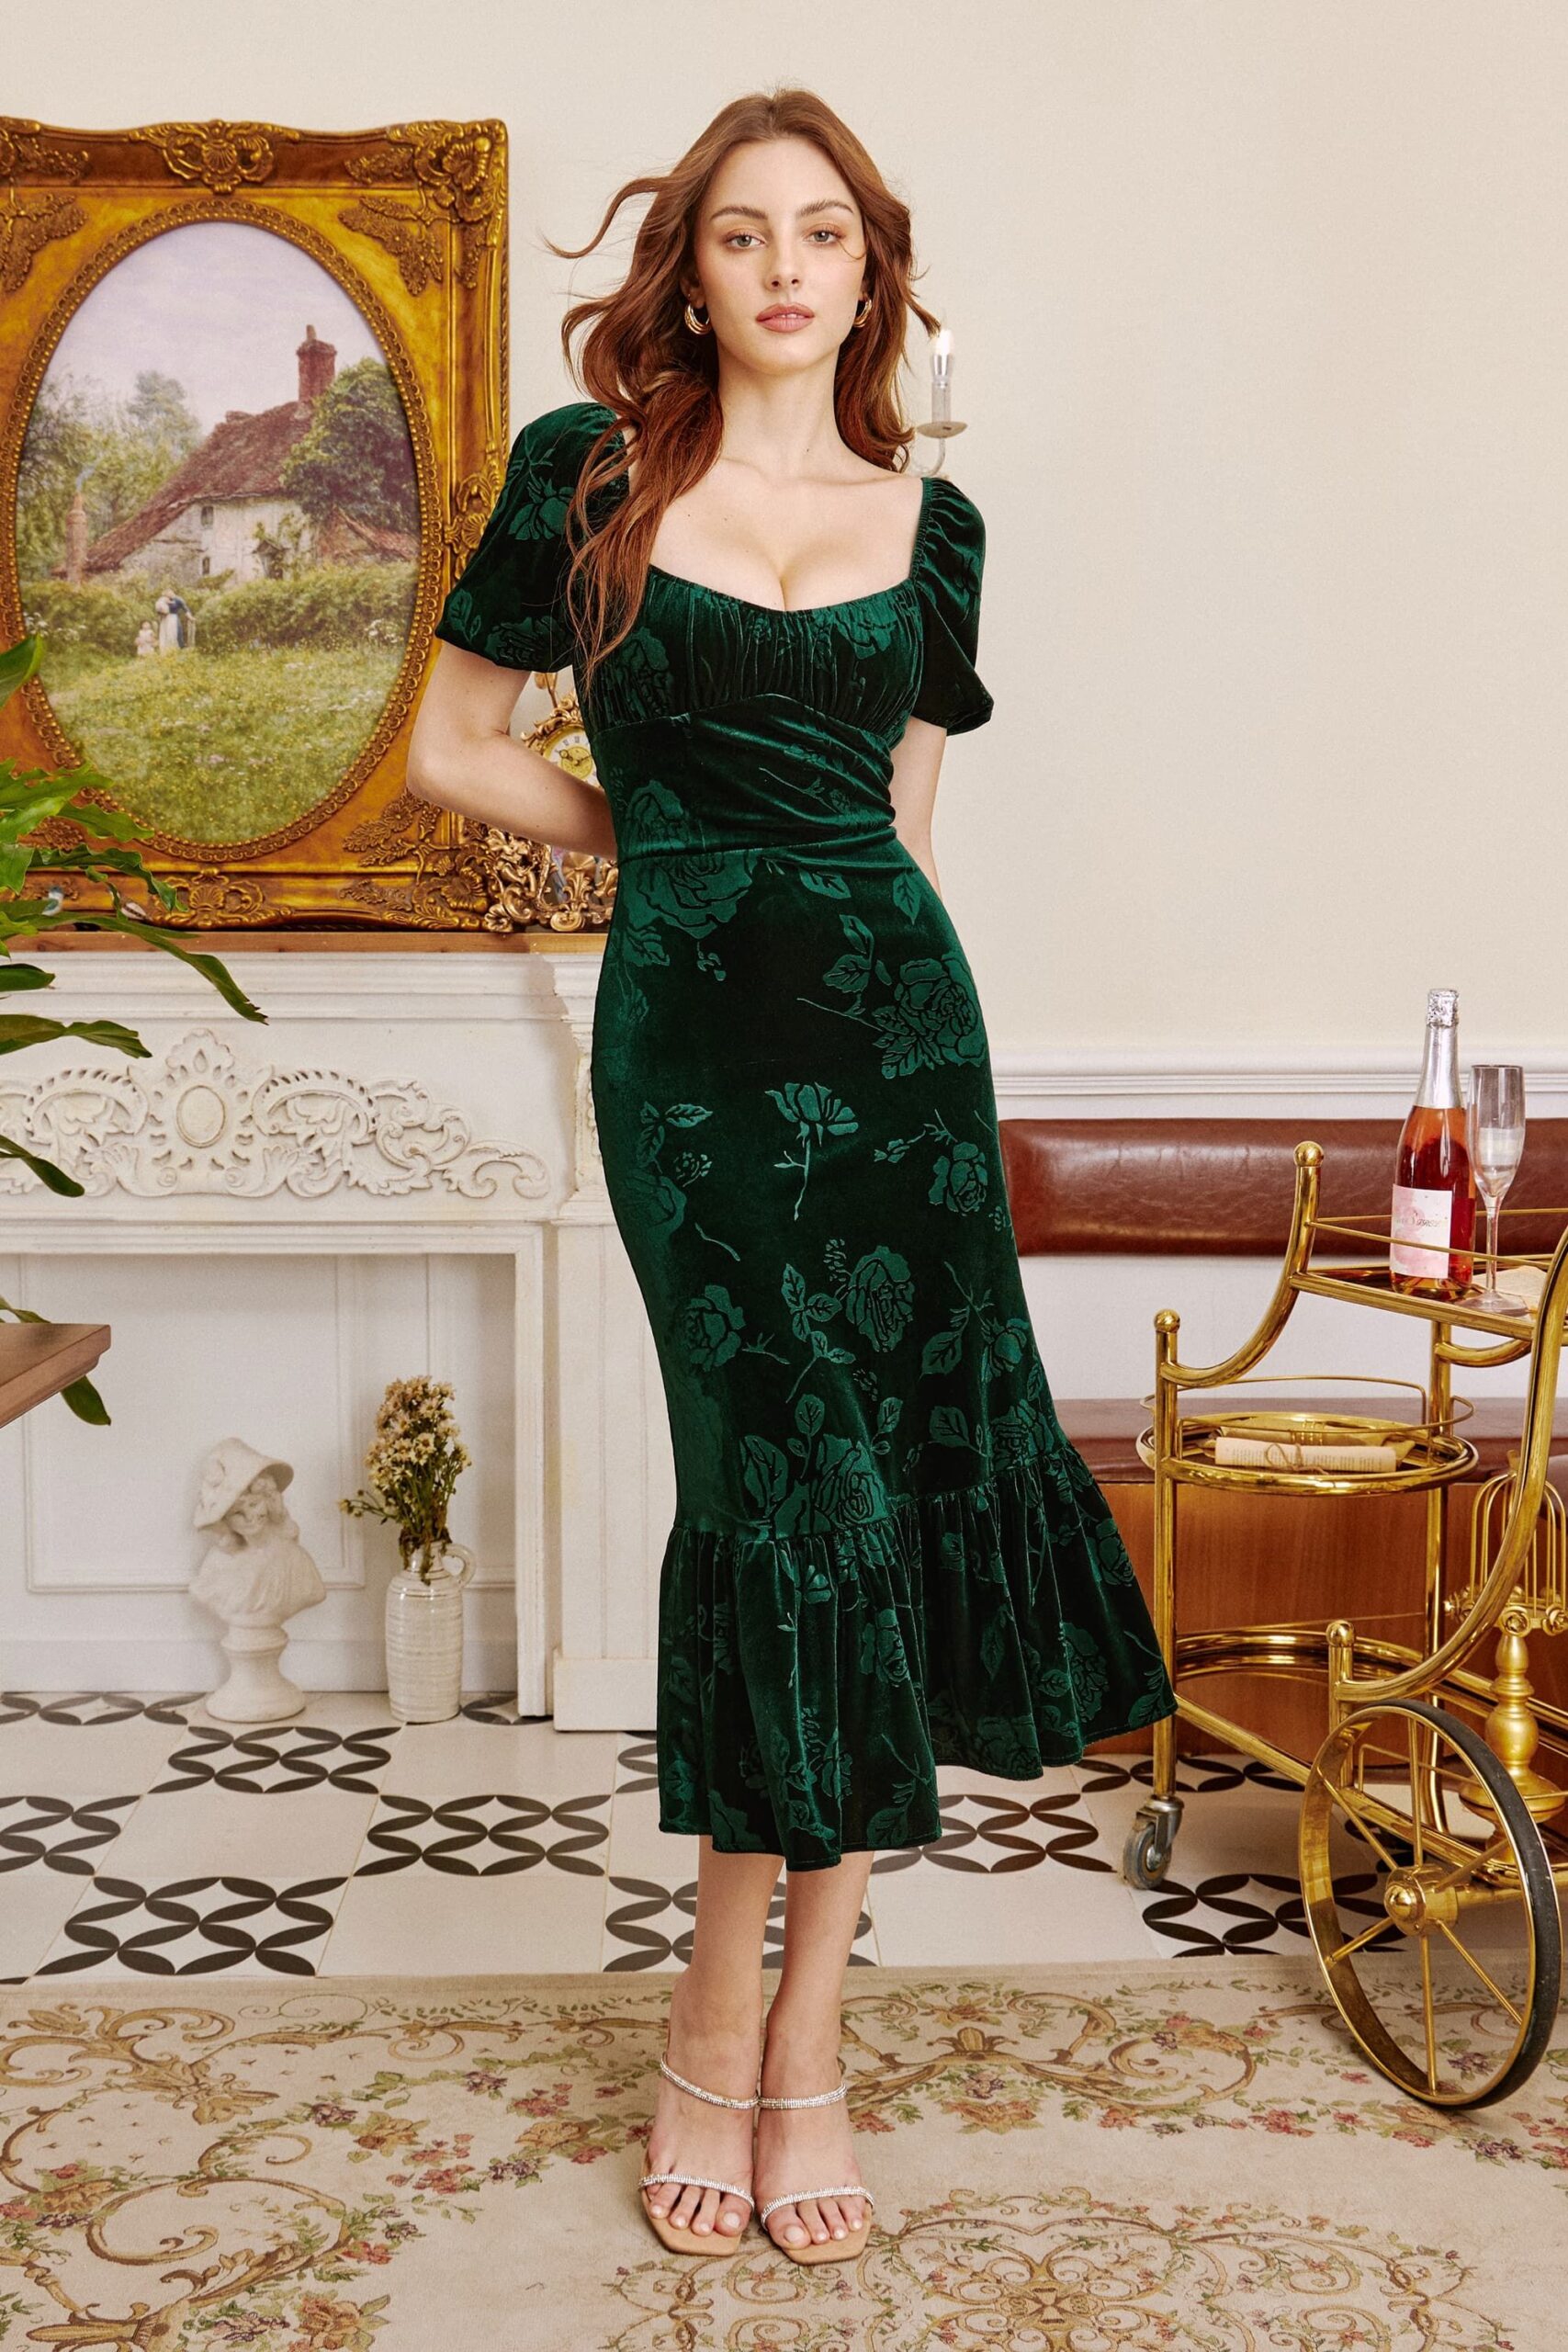 Velvet Dresses: Perfect for Evening
Parties